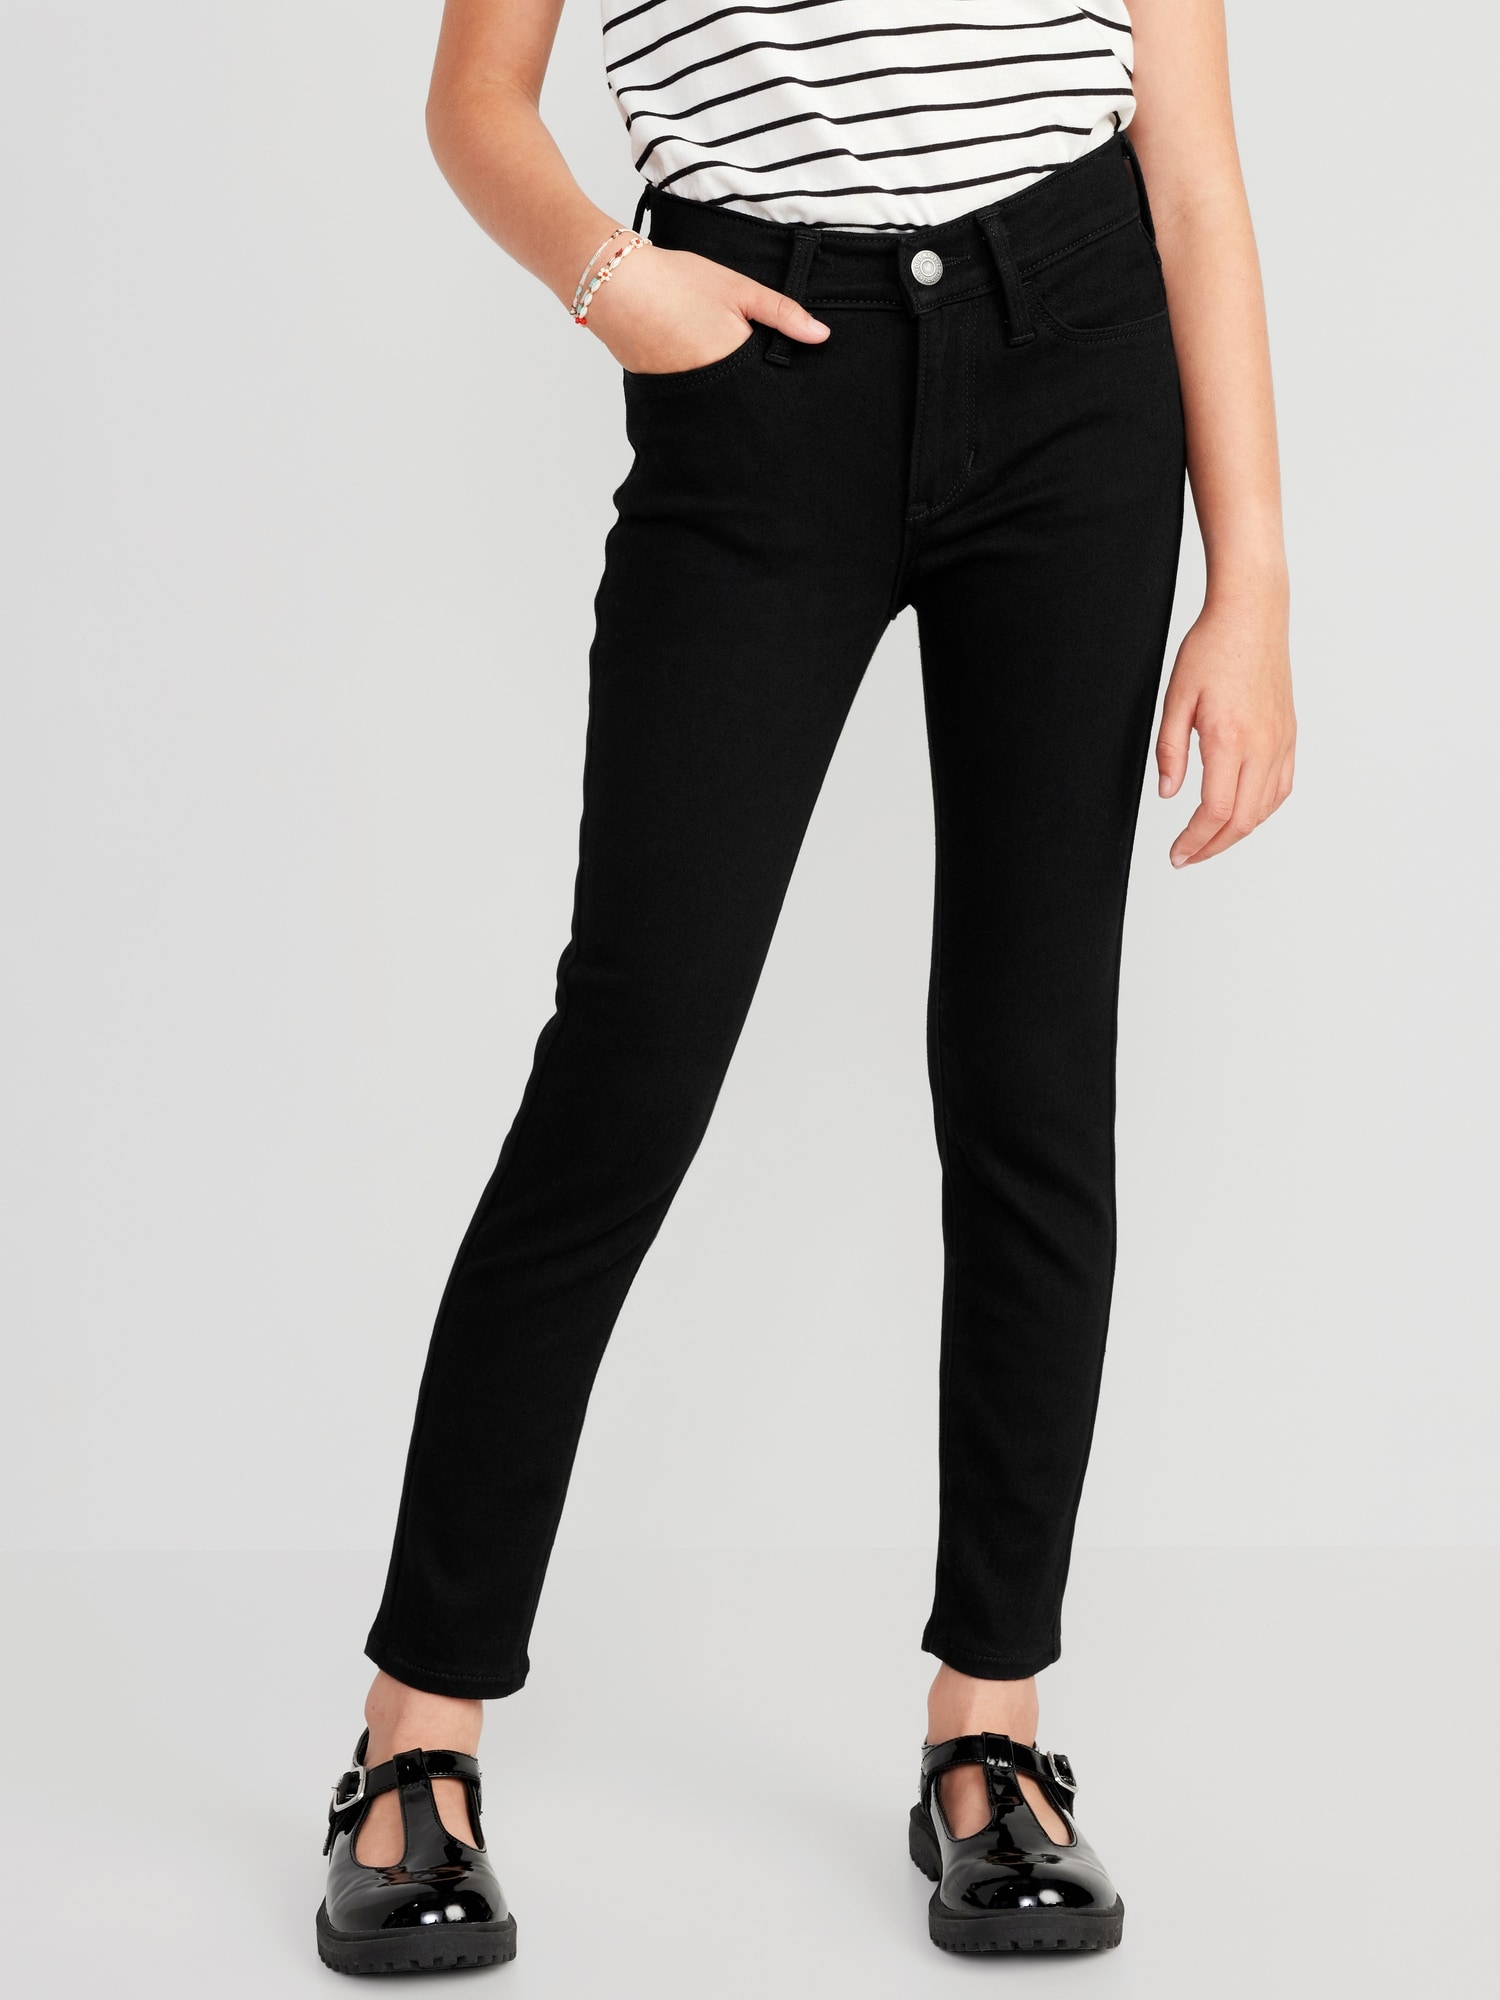 Old Navy Rockstar Jeans Women's 16 Black Denim Super Skinny Jeans Built In  Warm